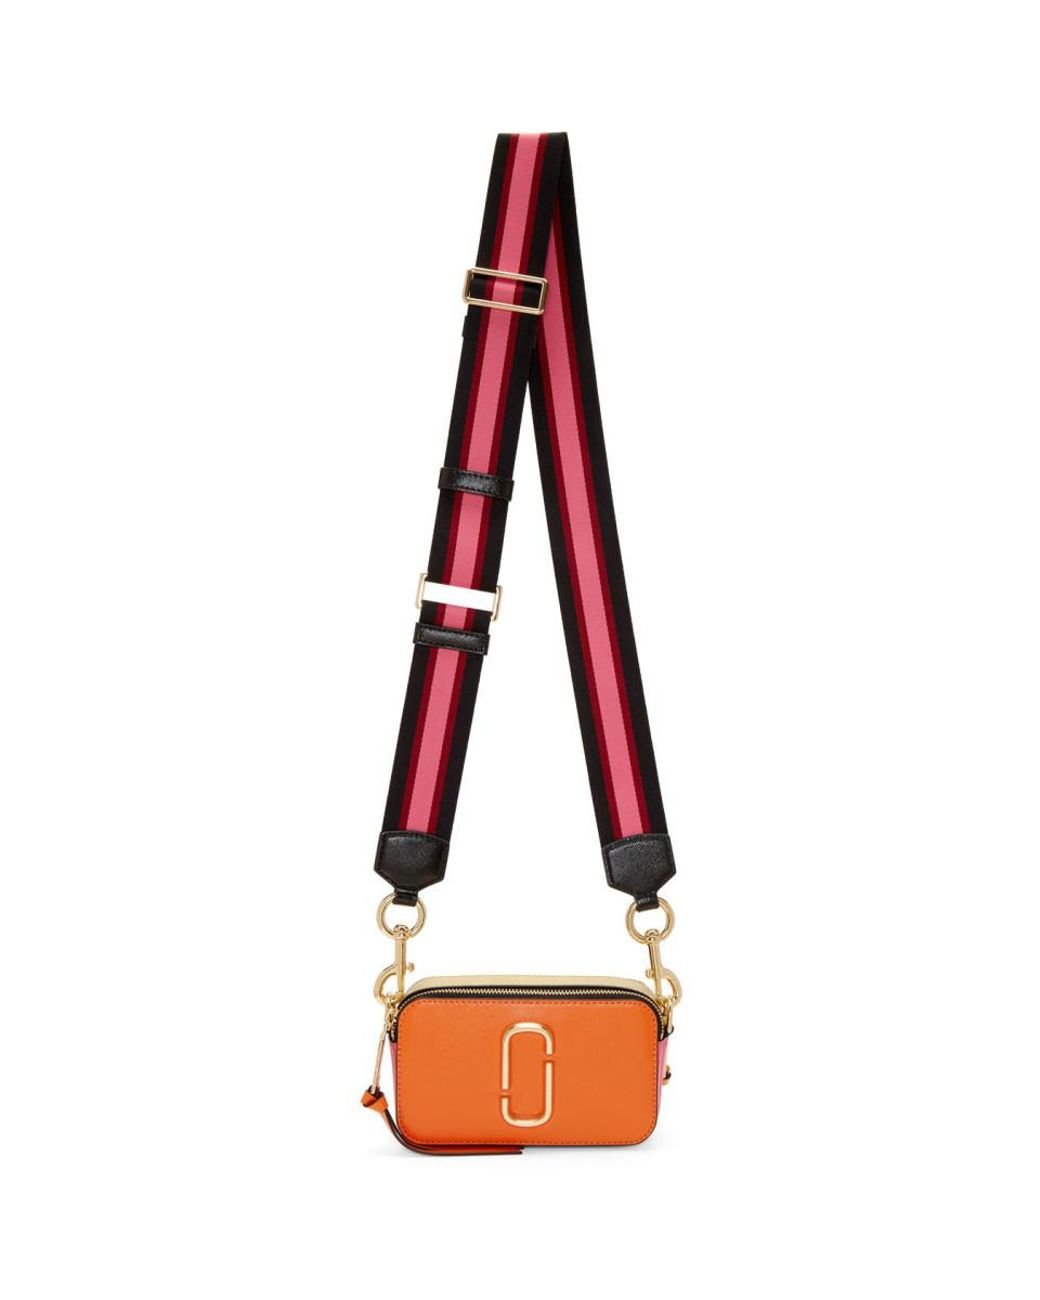 Marc Jacobs Small Snapshot Camera Bag Purse - New Orange and Cream